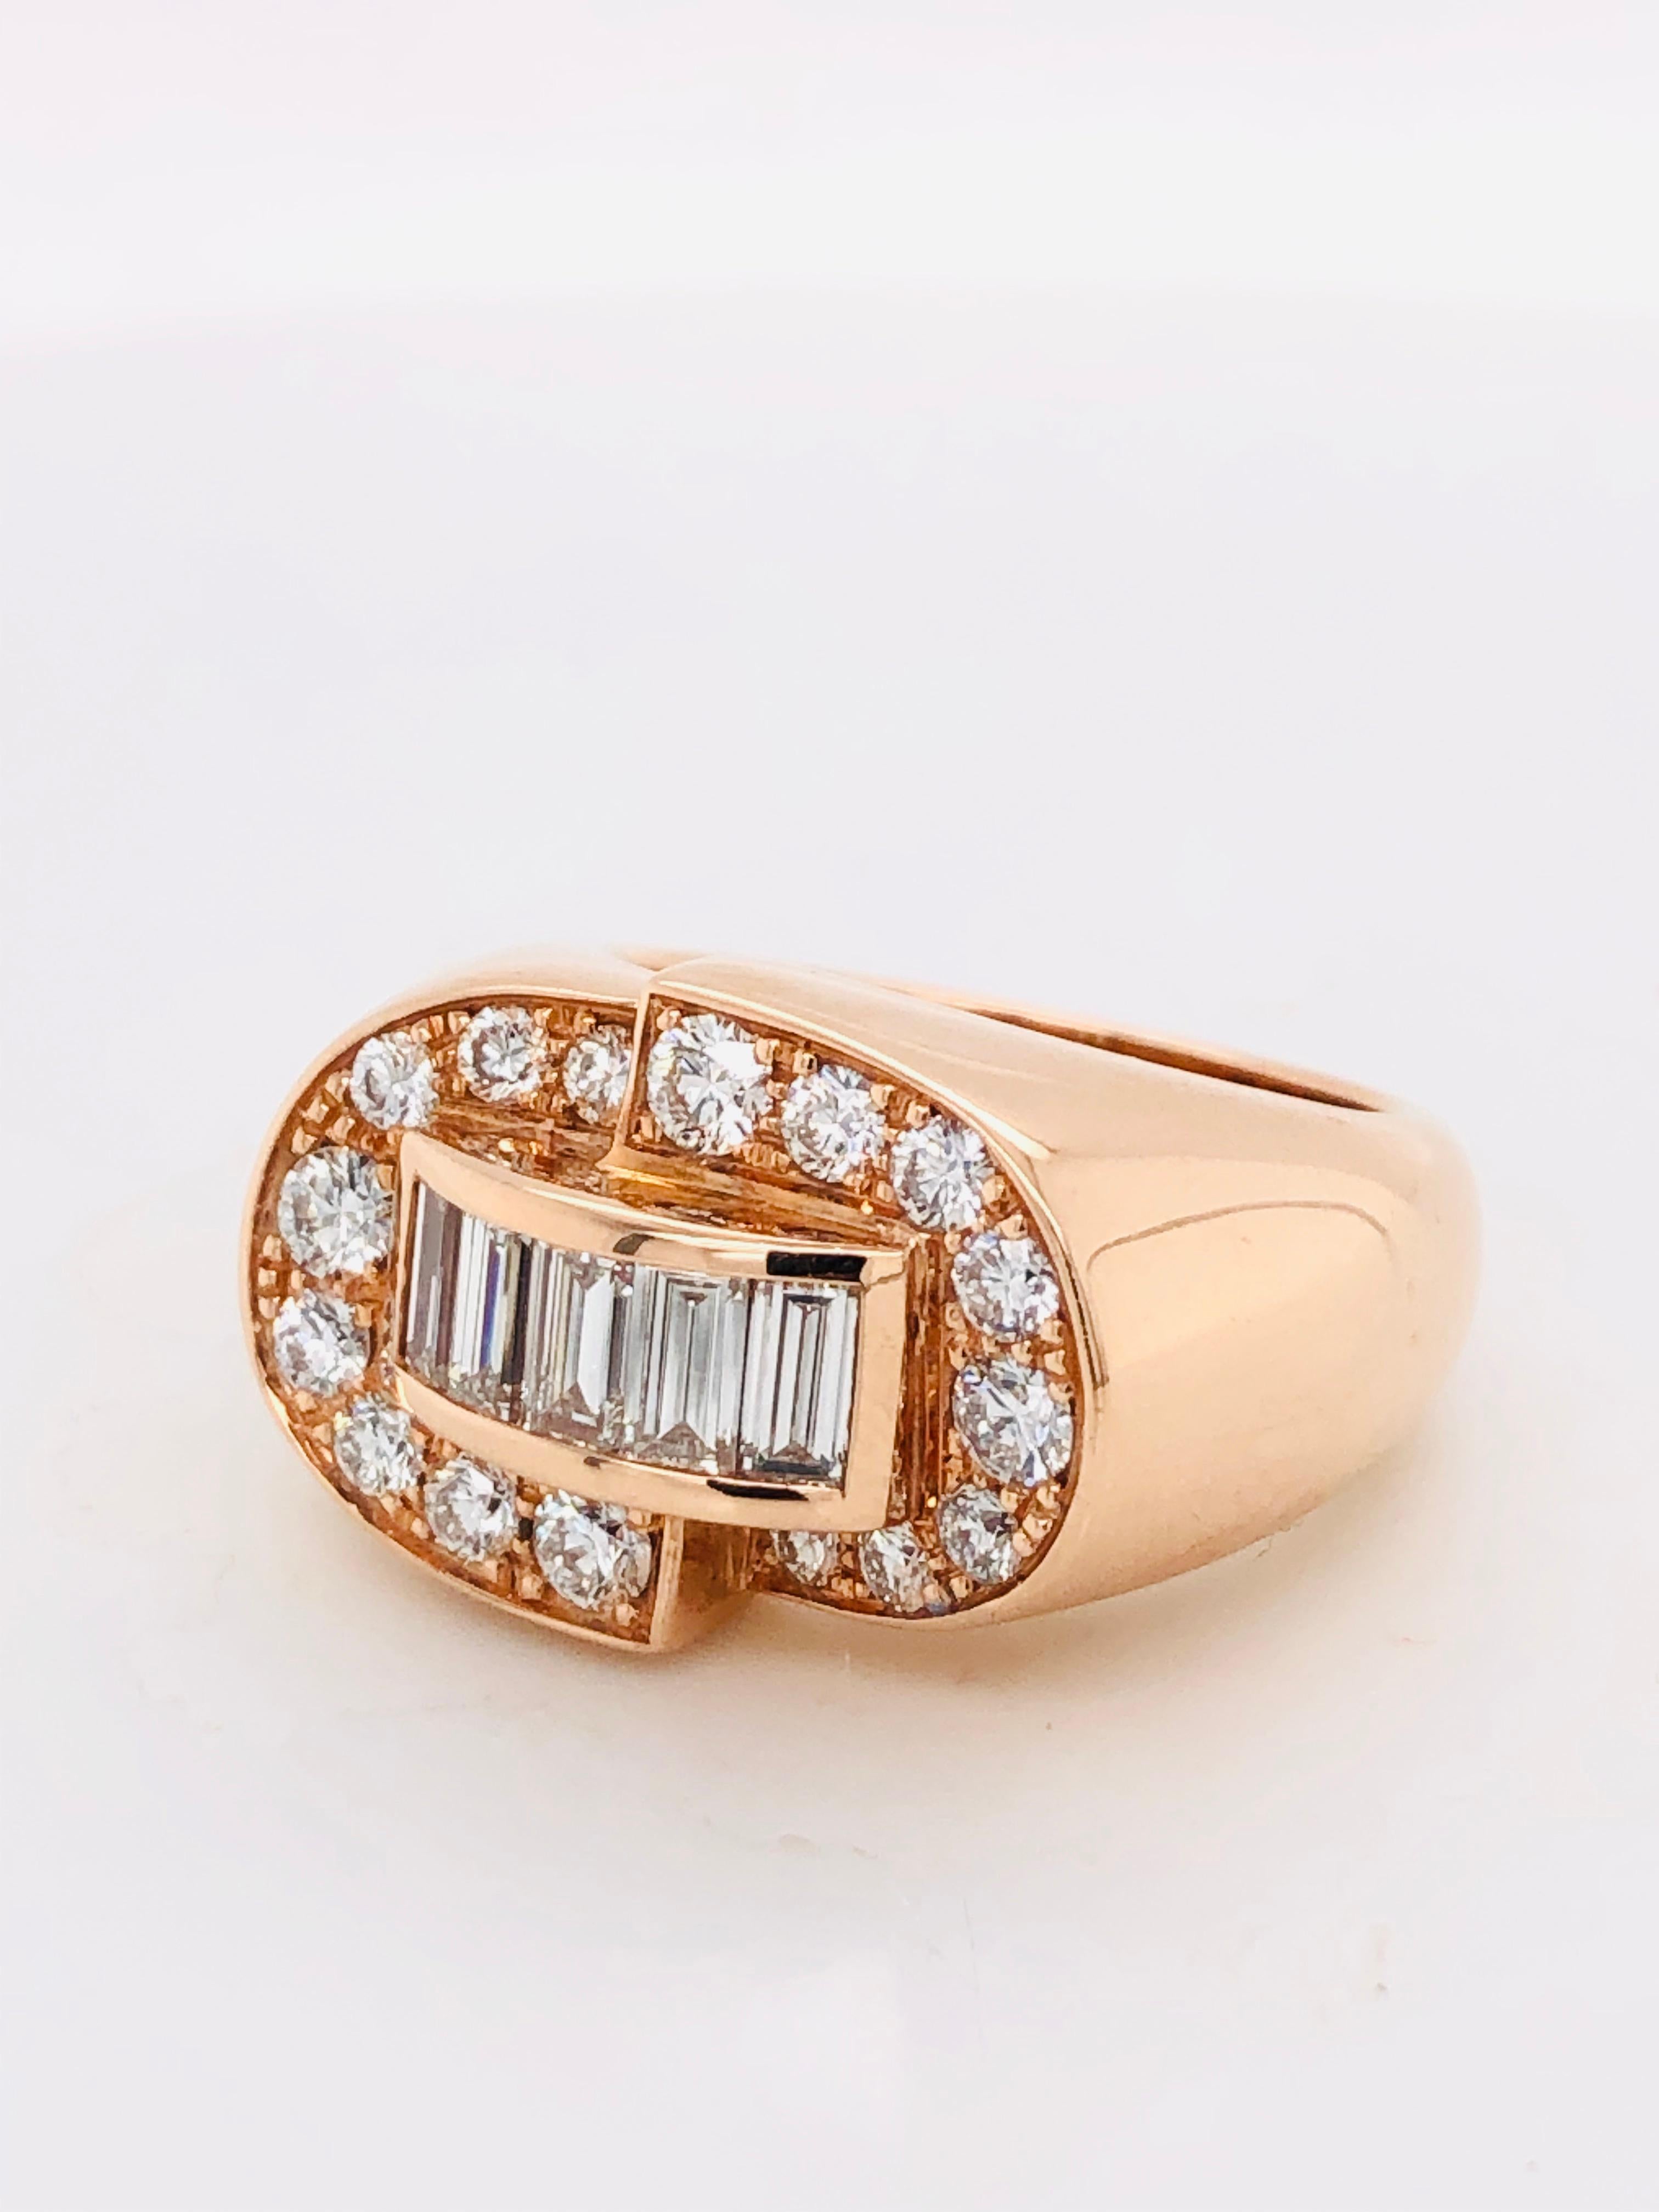 White Diamonds Baguette Cut and Brilliant Cut on Rose Gold 18 Karat Fashion Ring 1